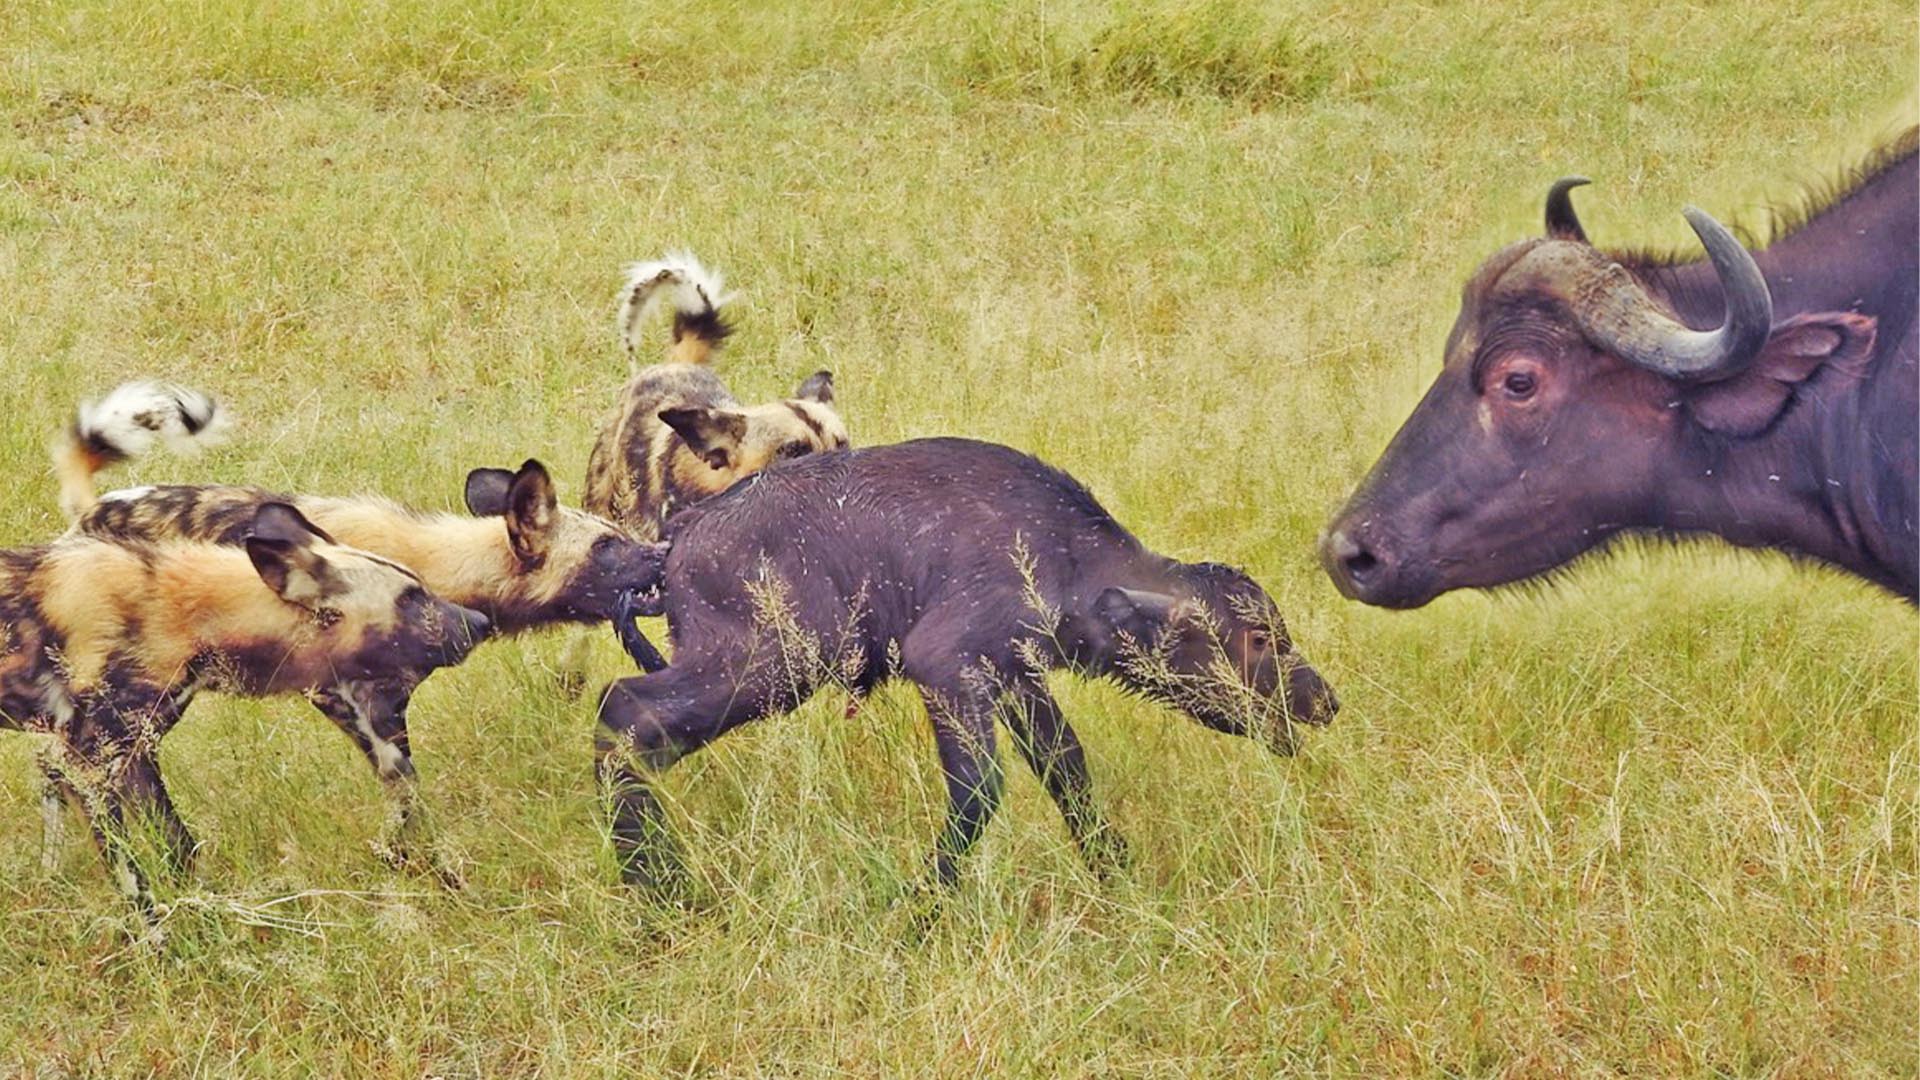 Wild Dogs Take 5 Buffalo Calves in an EPIC Feeding Frenzy!